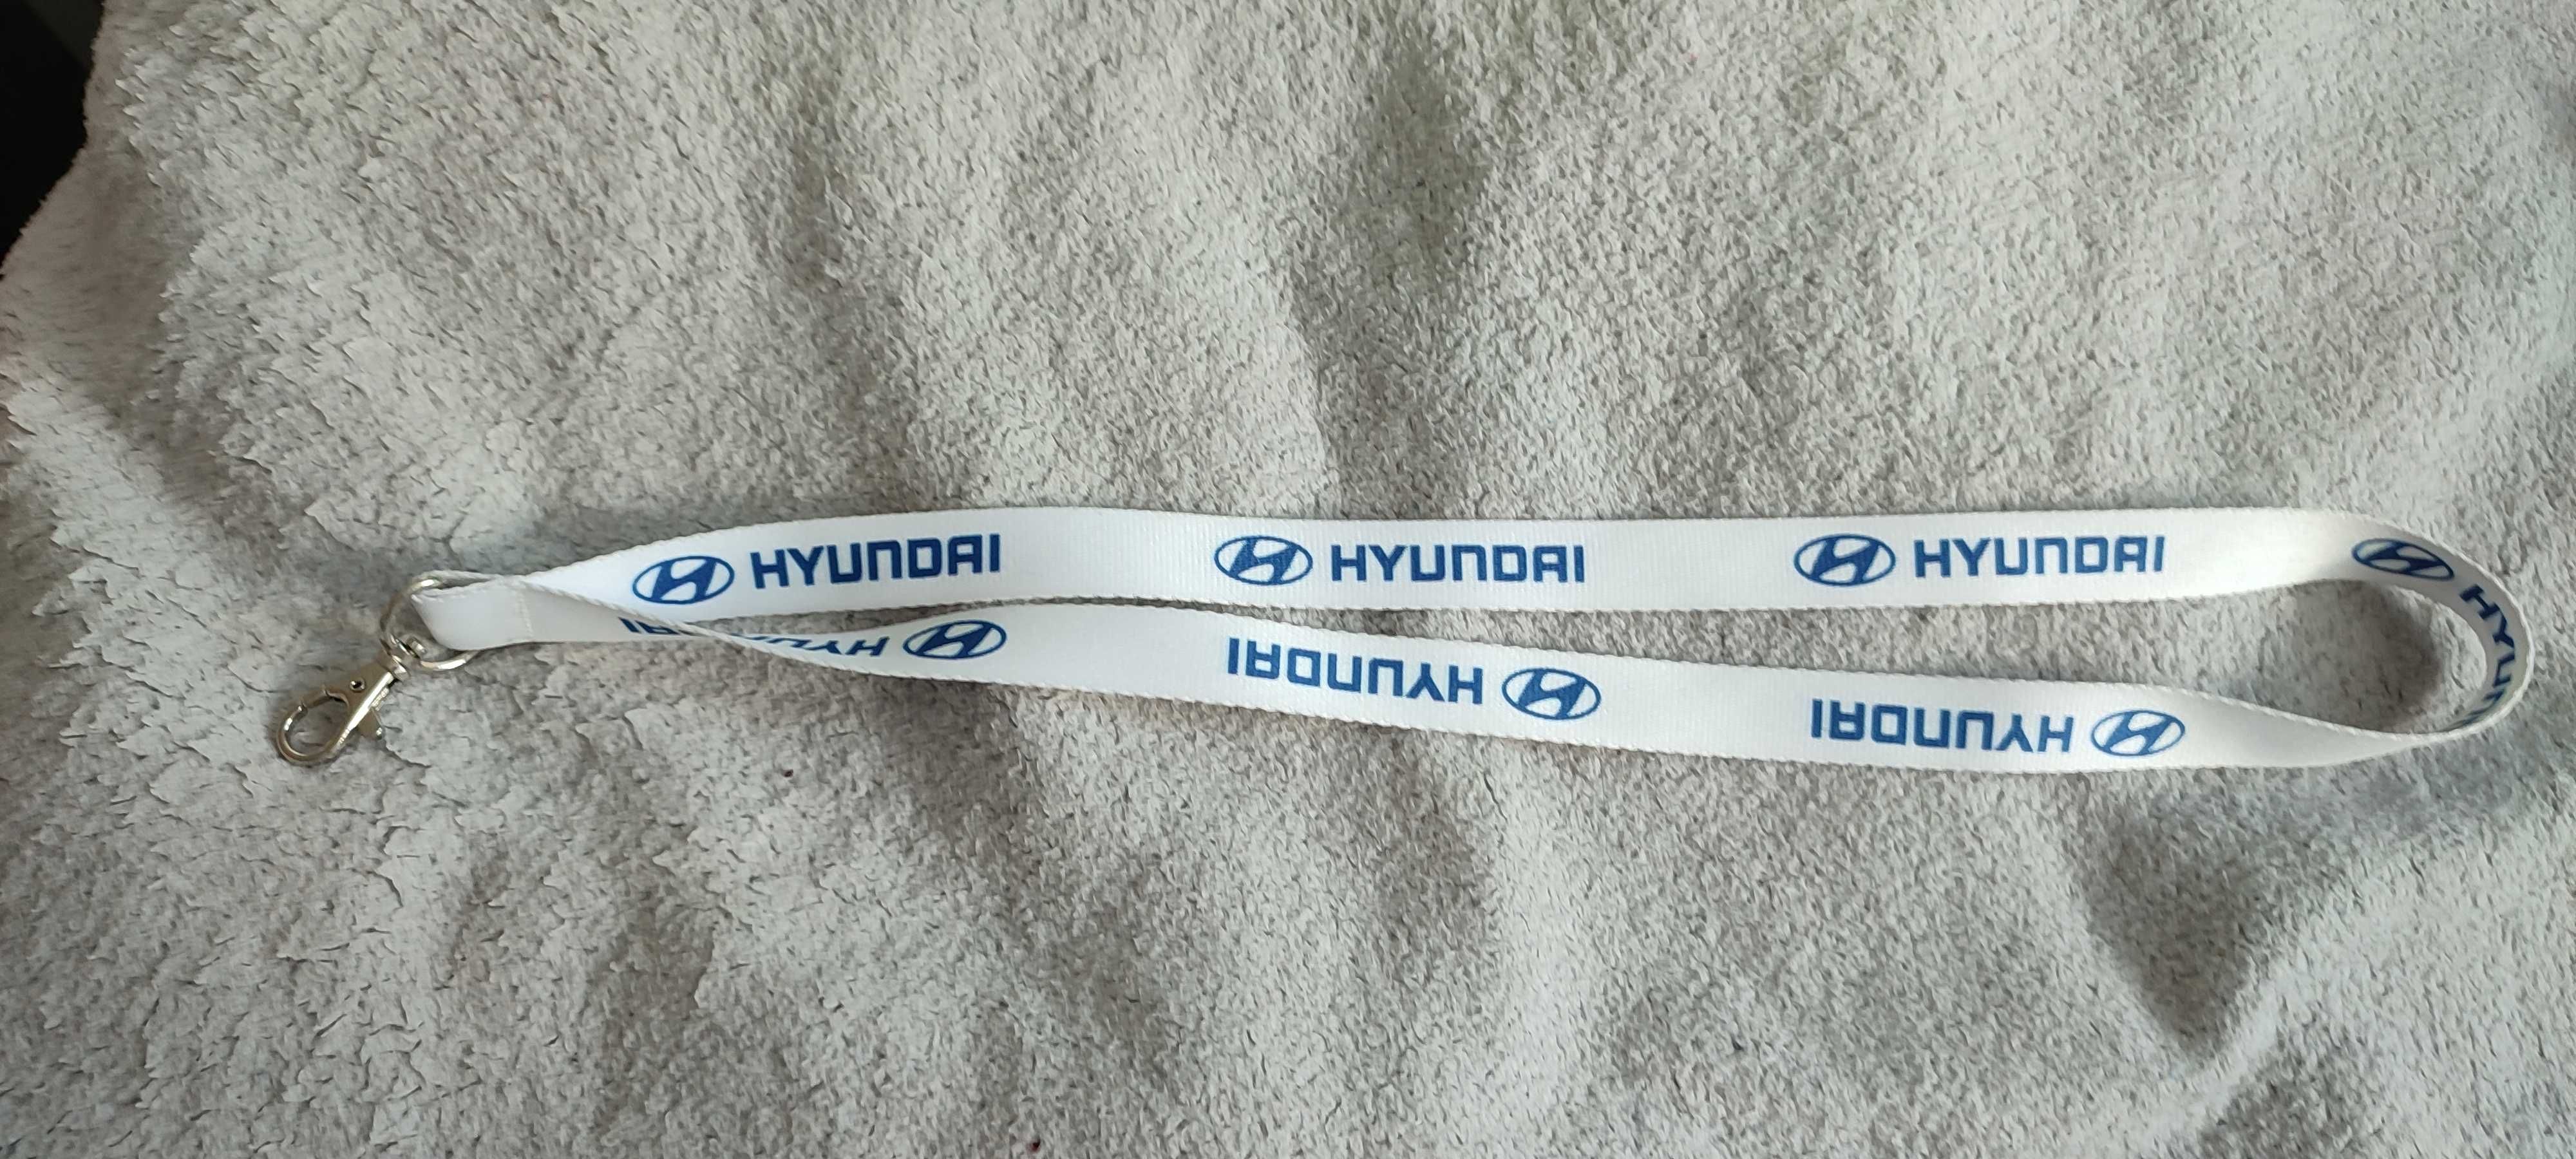 Smycz Hyundai.             .